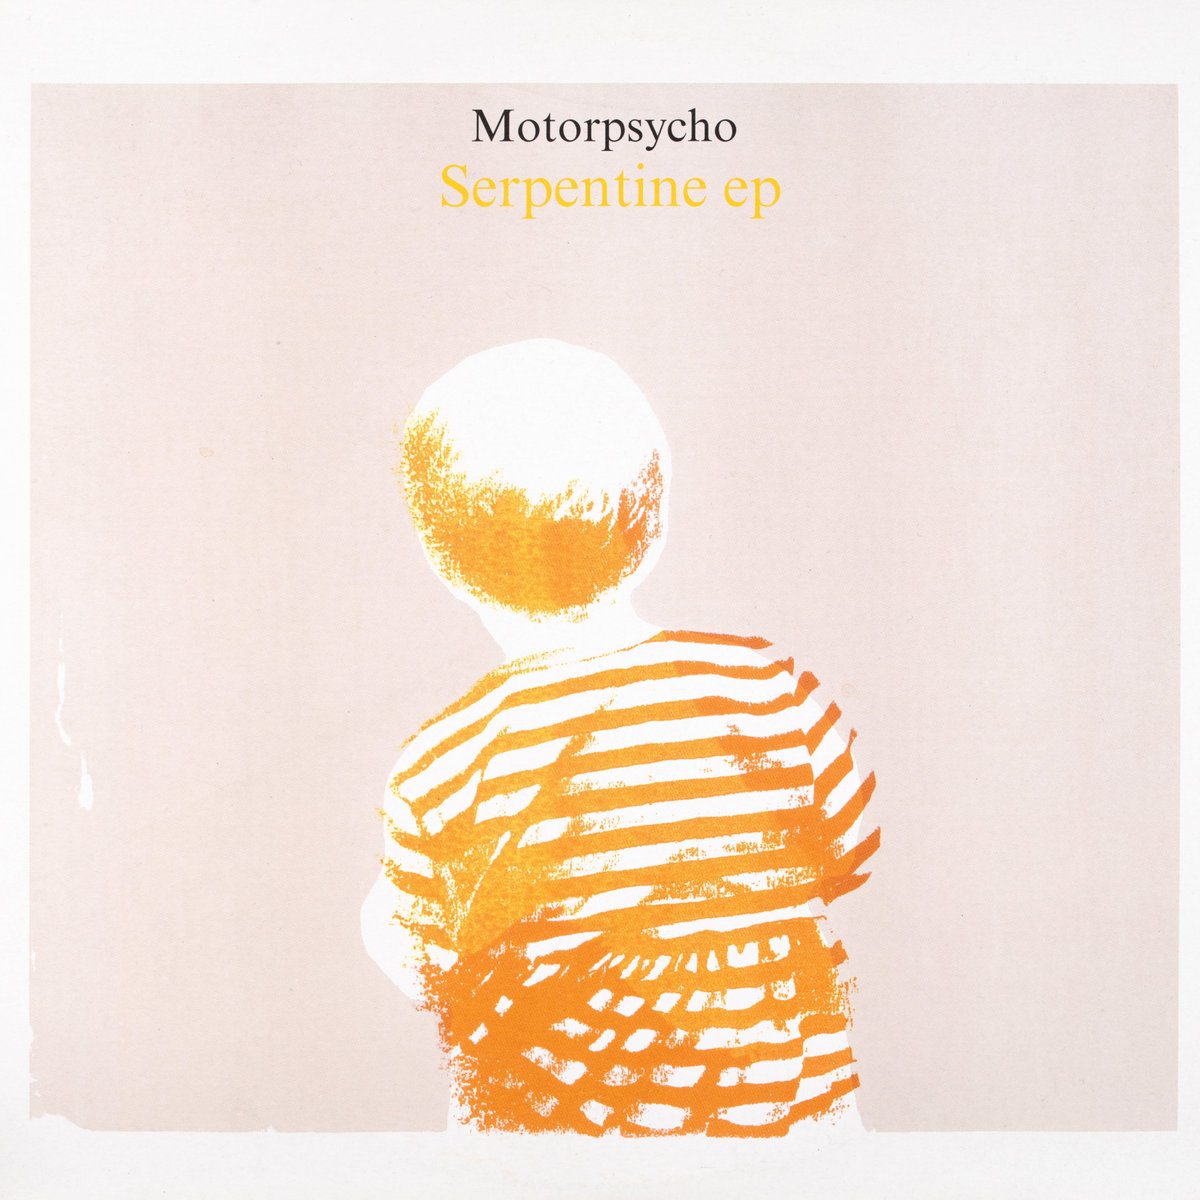 GM!

Motorpsycho - Serpentine EP